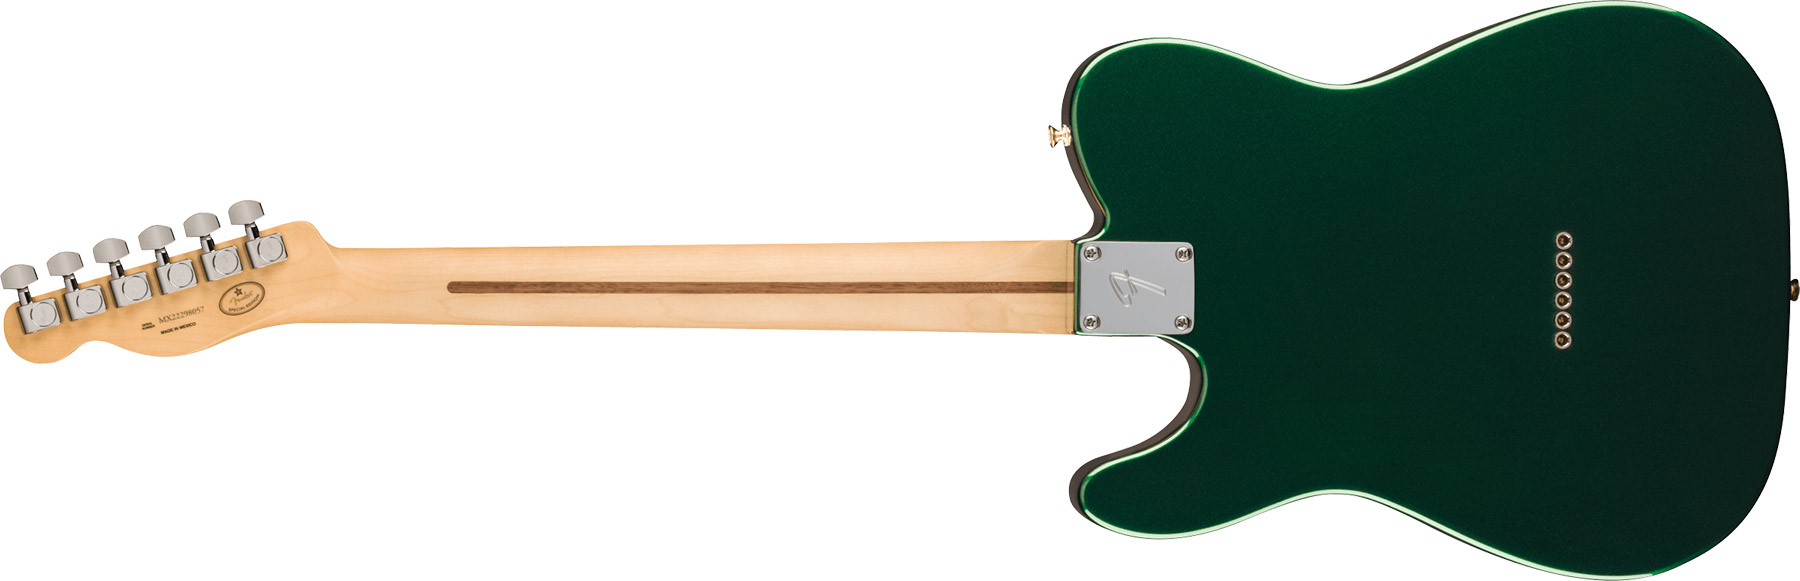 Fender Tele Player Ltd Mex 2s Seymour Duncan Mn - British Racing Green - Guitarra eléctrica con forma de tel - Variation 1